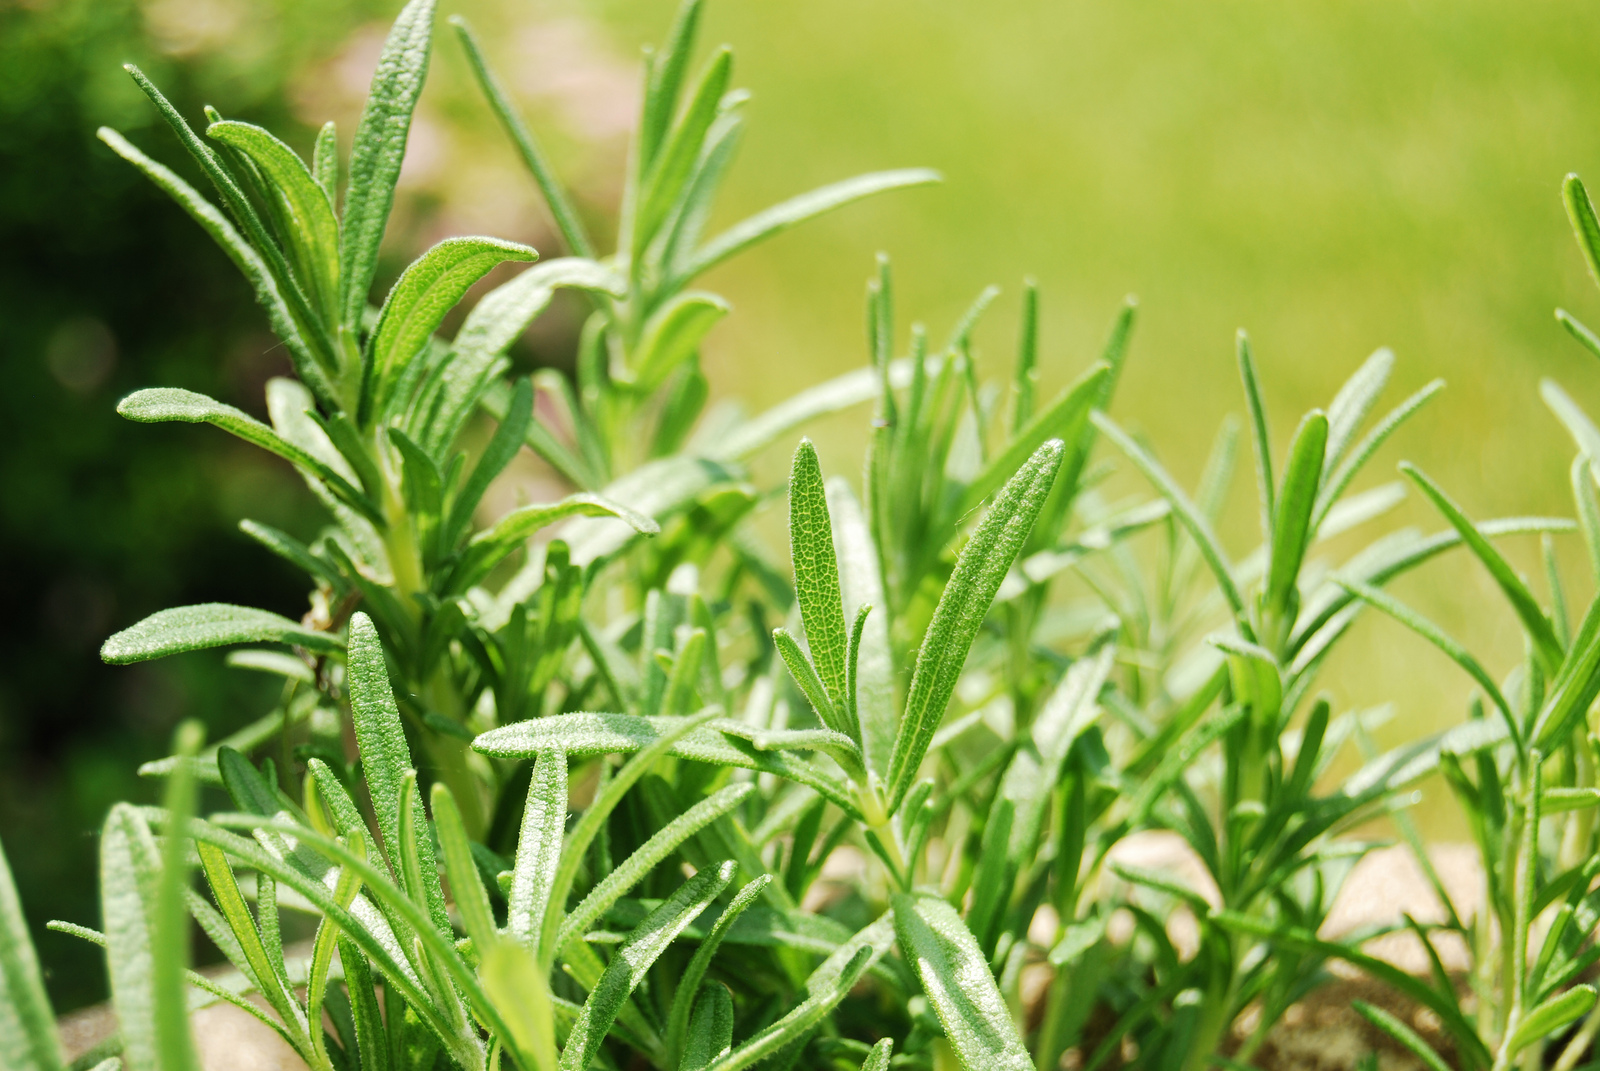 Rosemary from my herb garden by alice_henneman, on Flickr